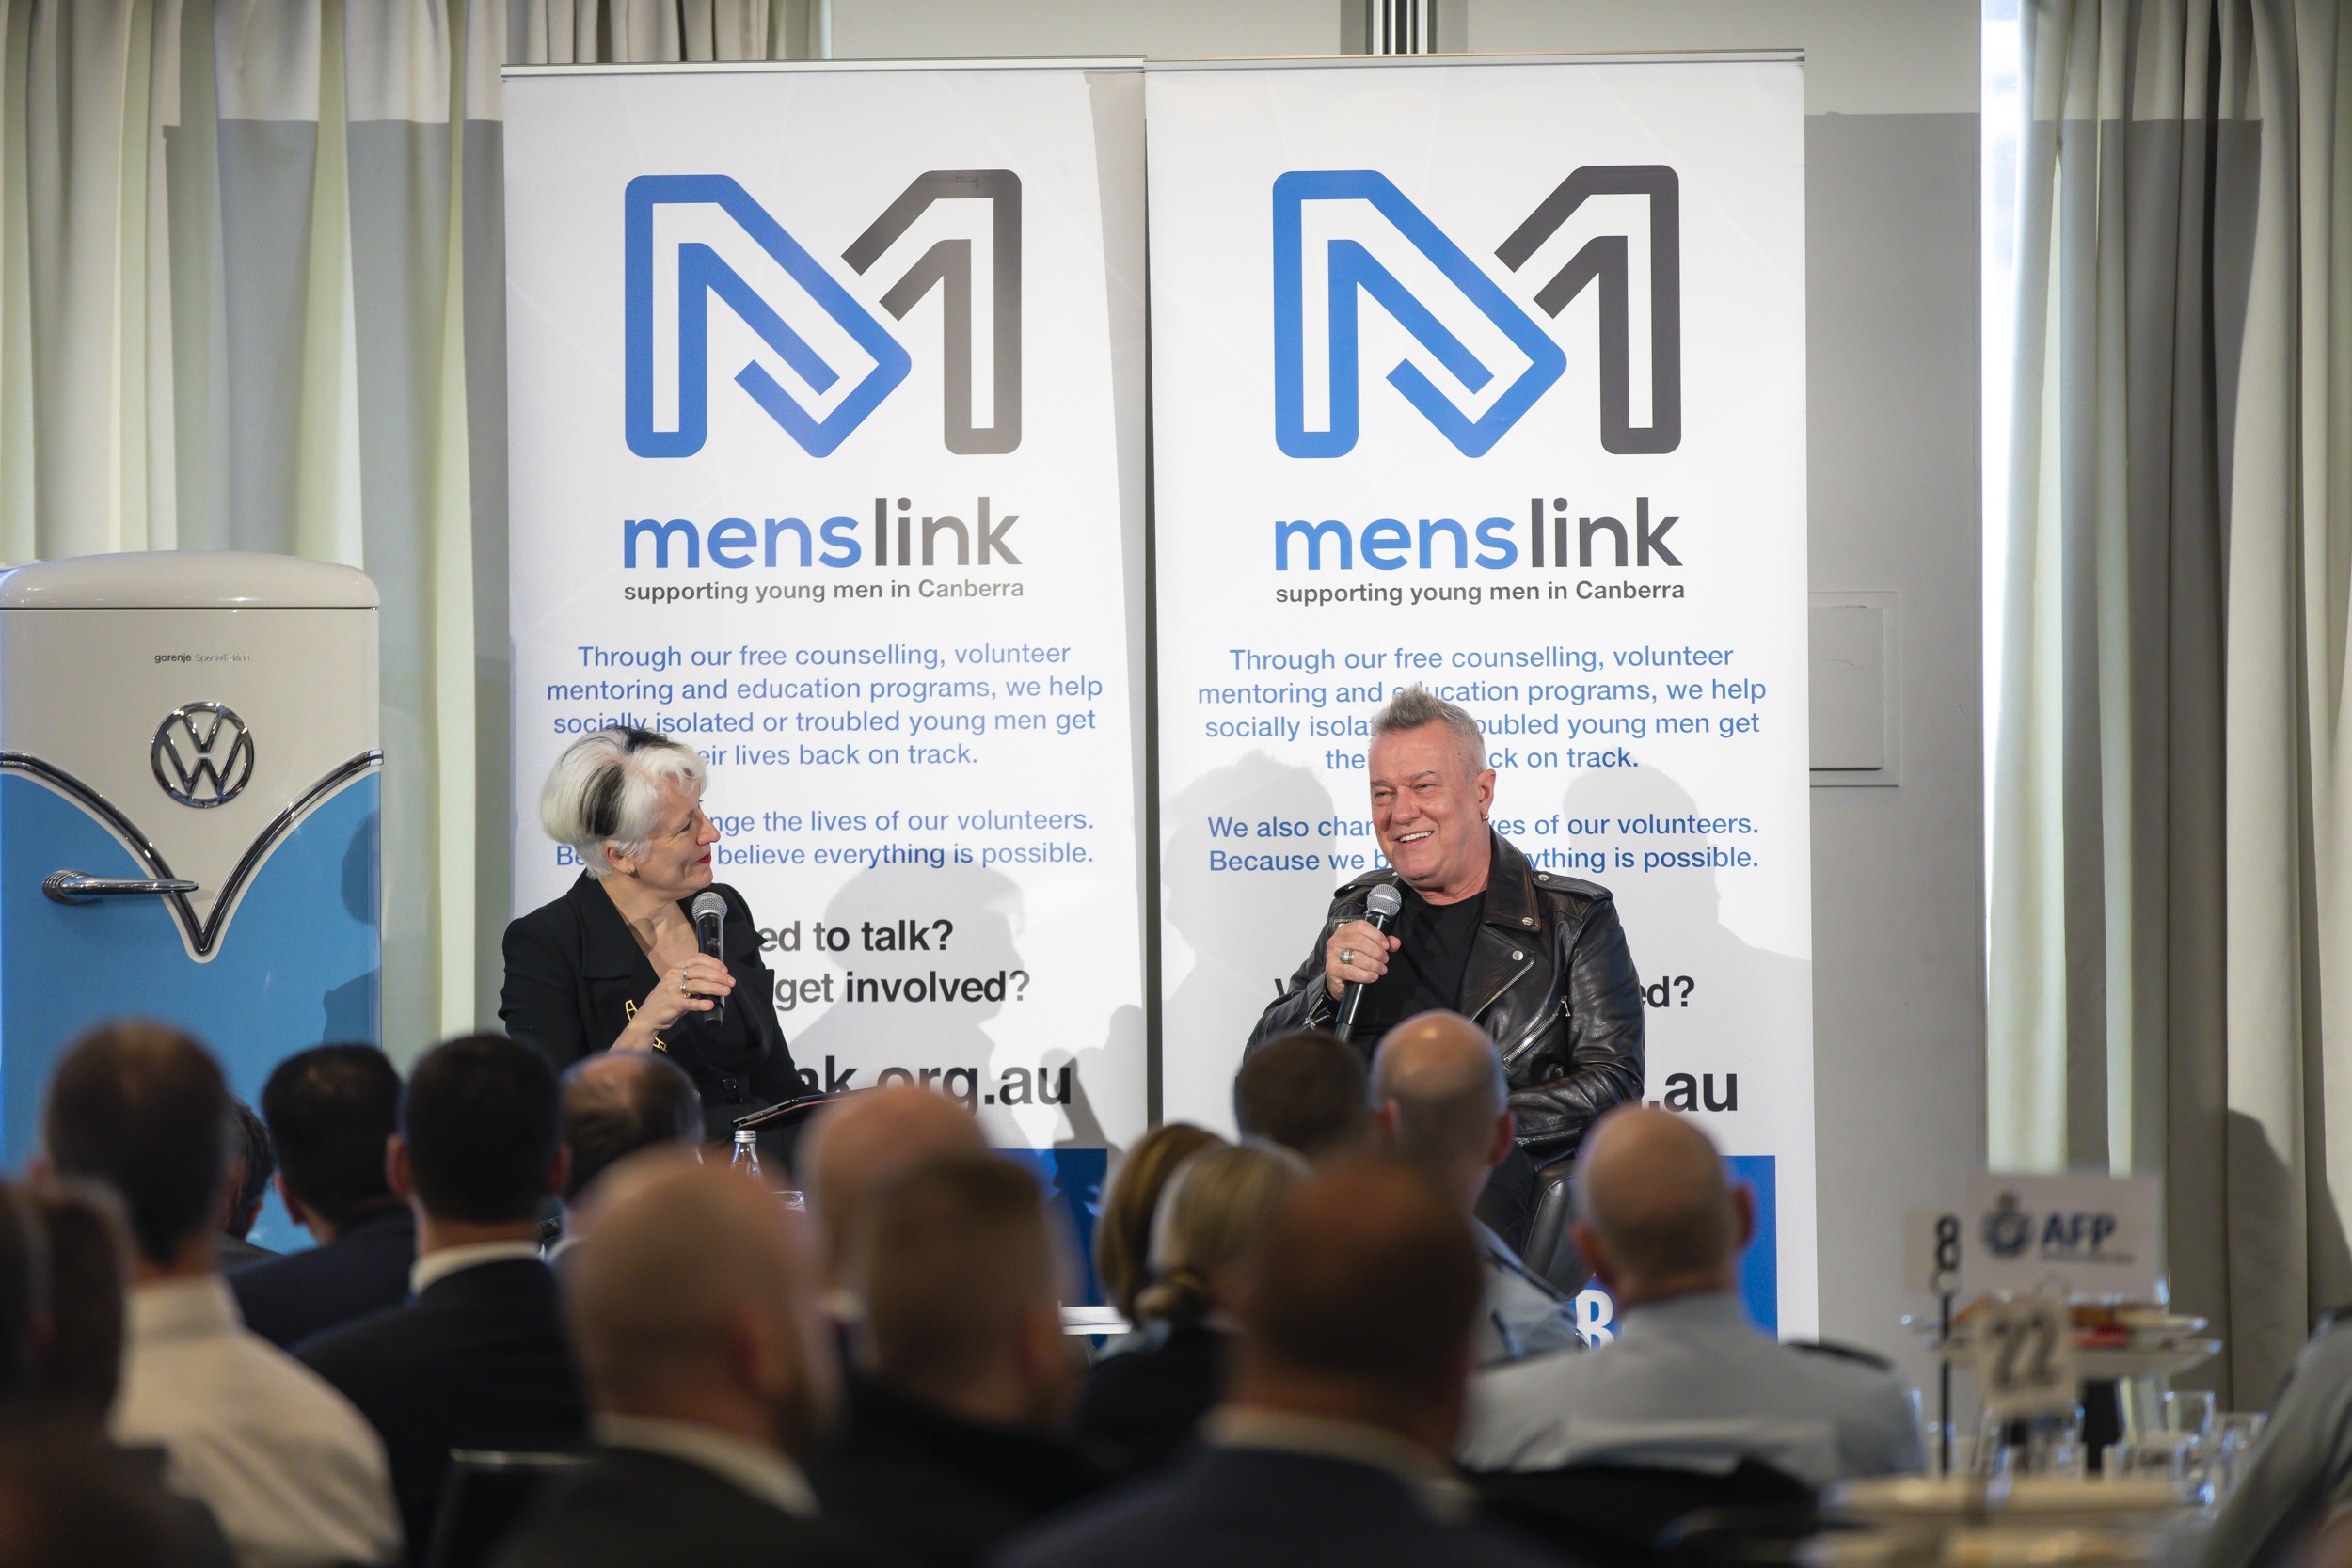 Jimmy Barnes lauds Menslink's lifesaving work for young men